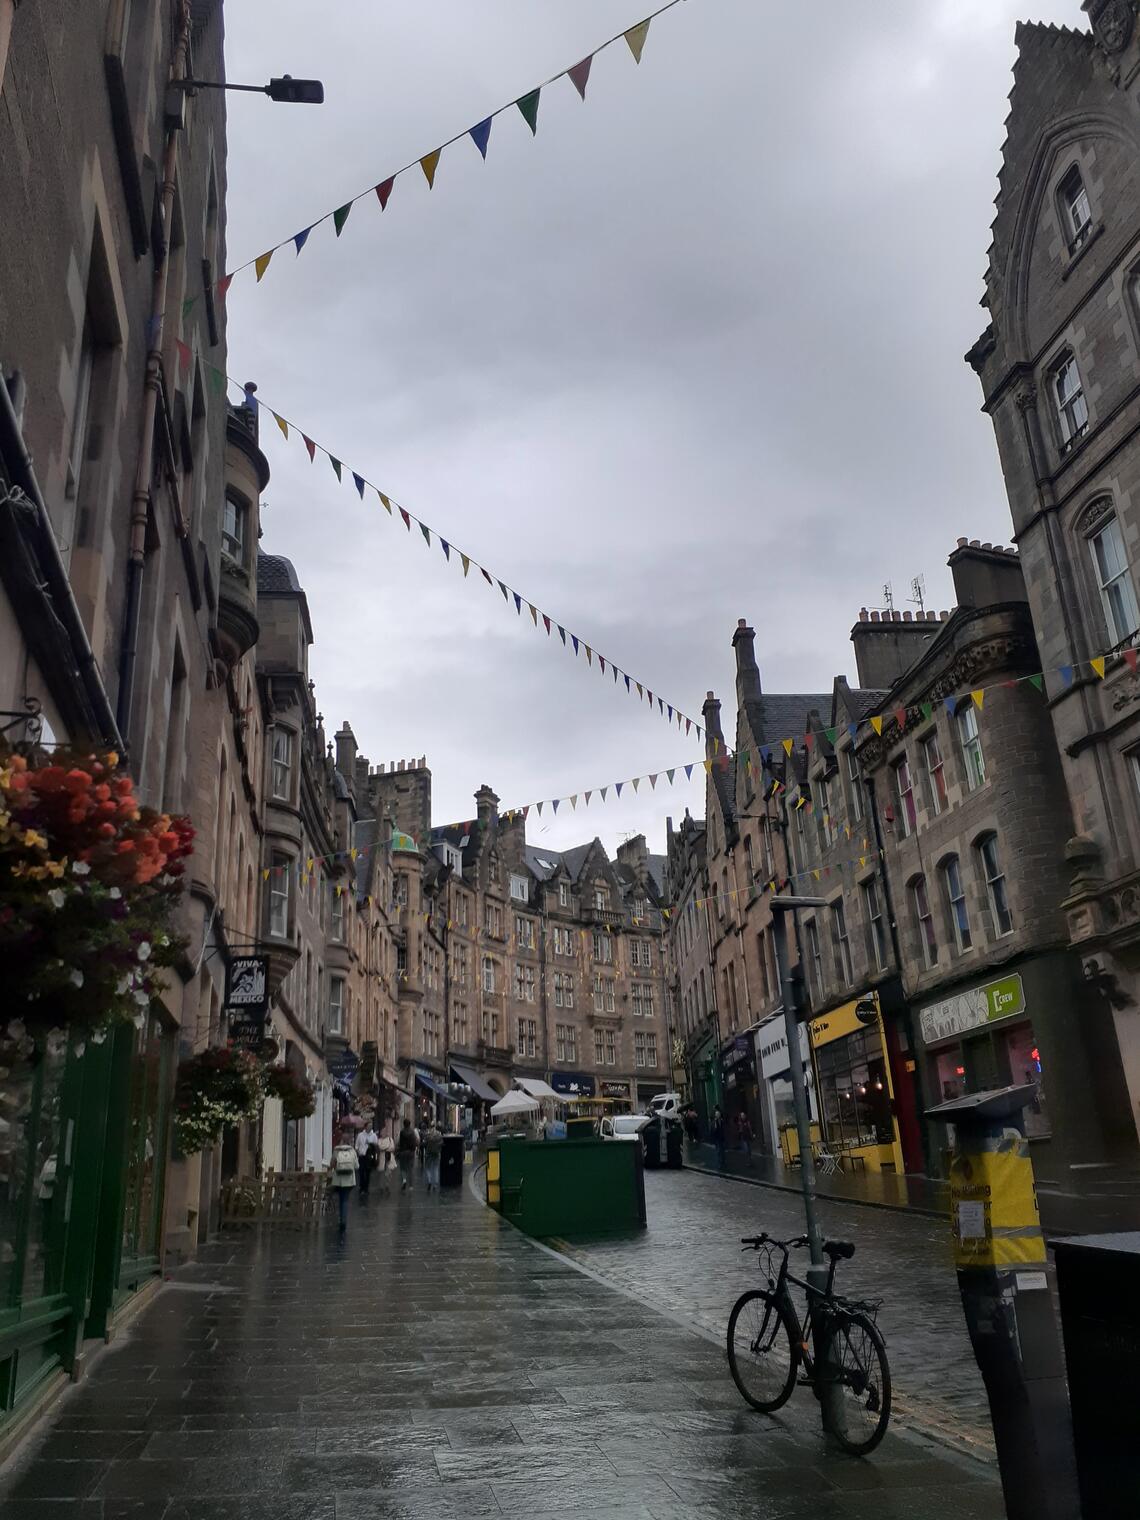 Rainy street in Edinburgh, looking up towards a cloudy sky